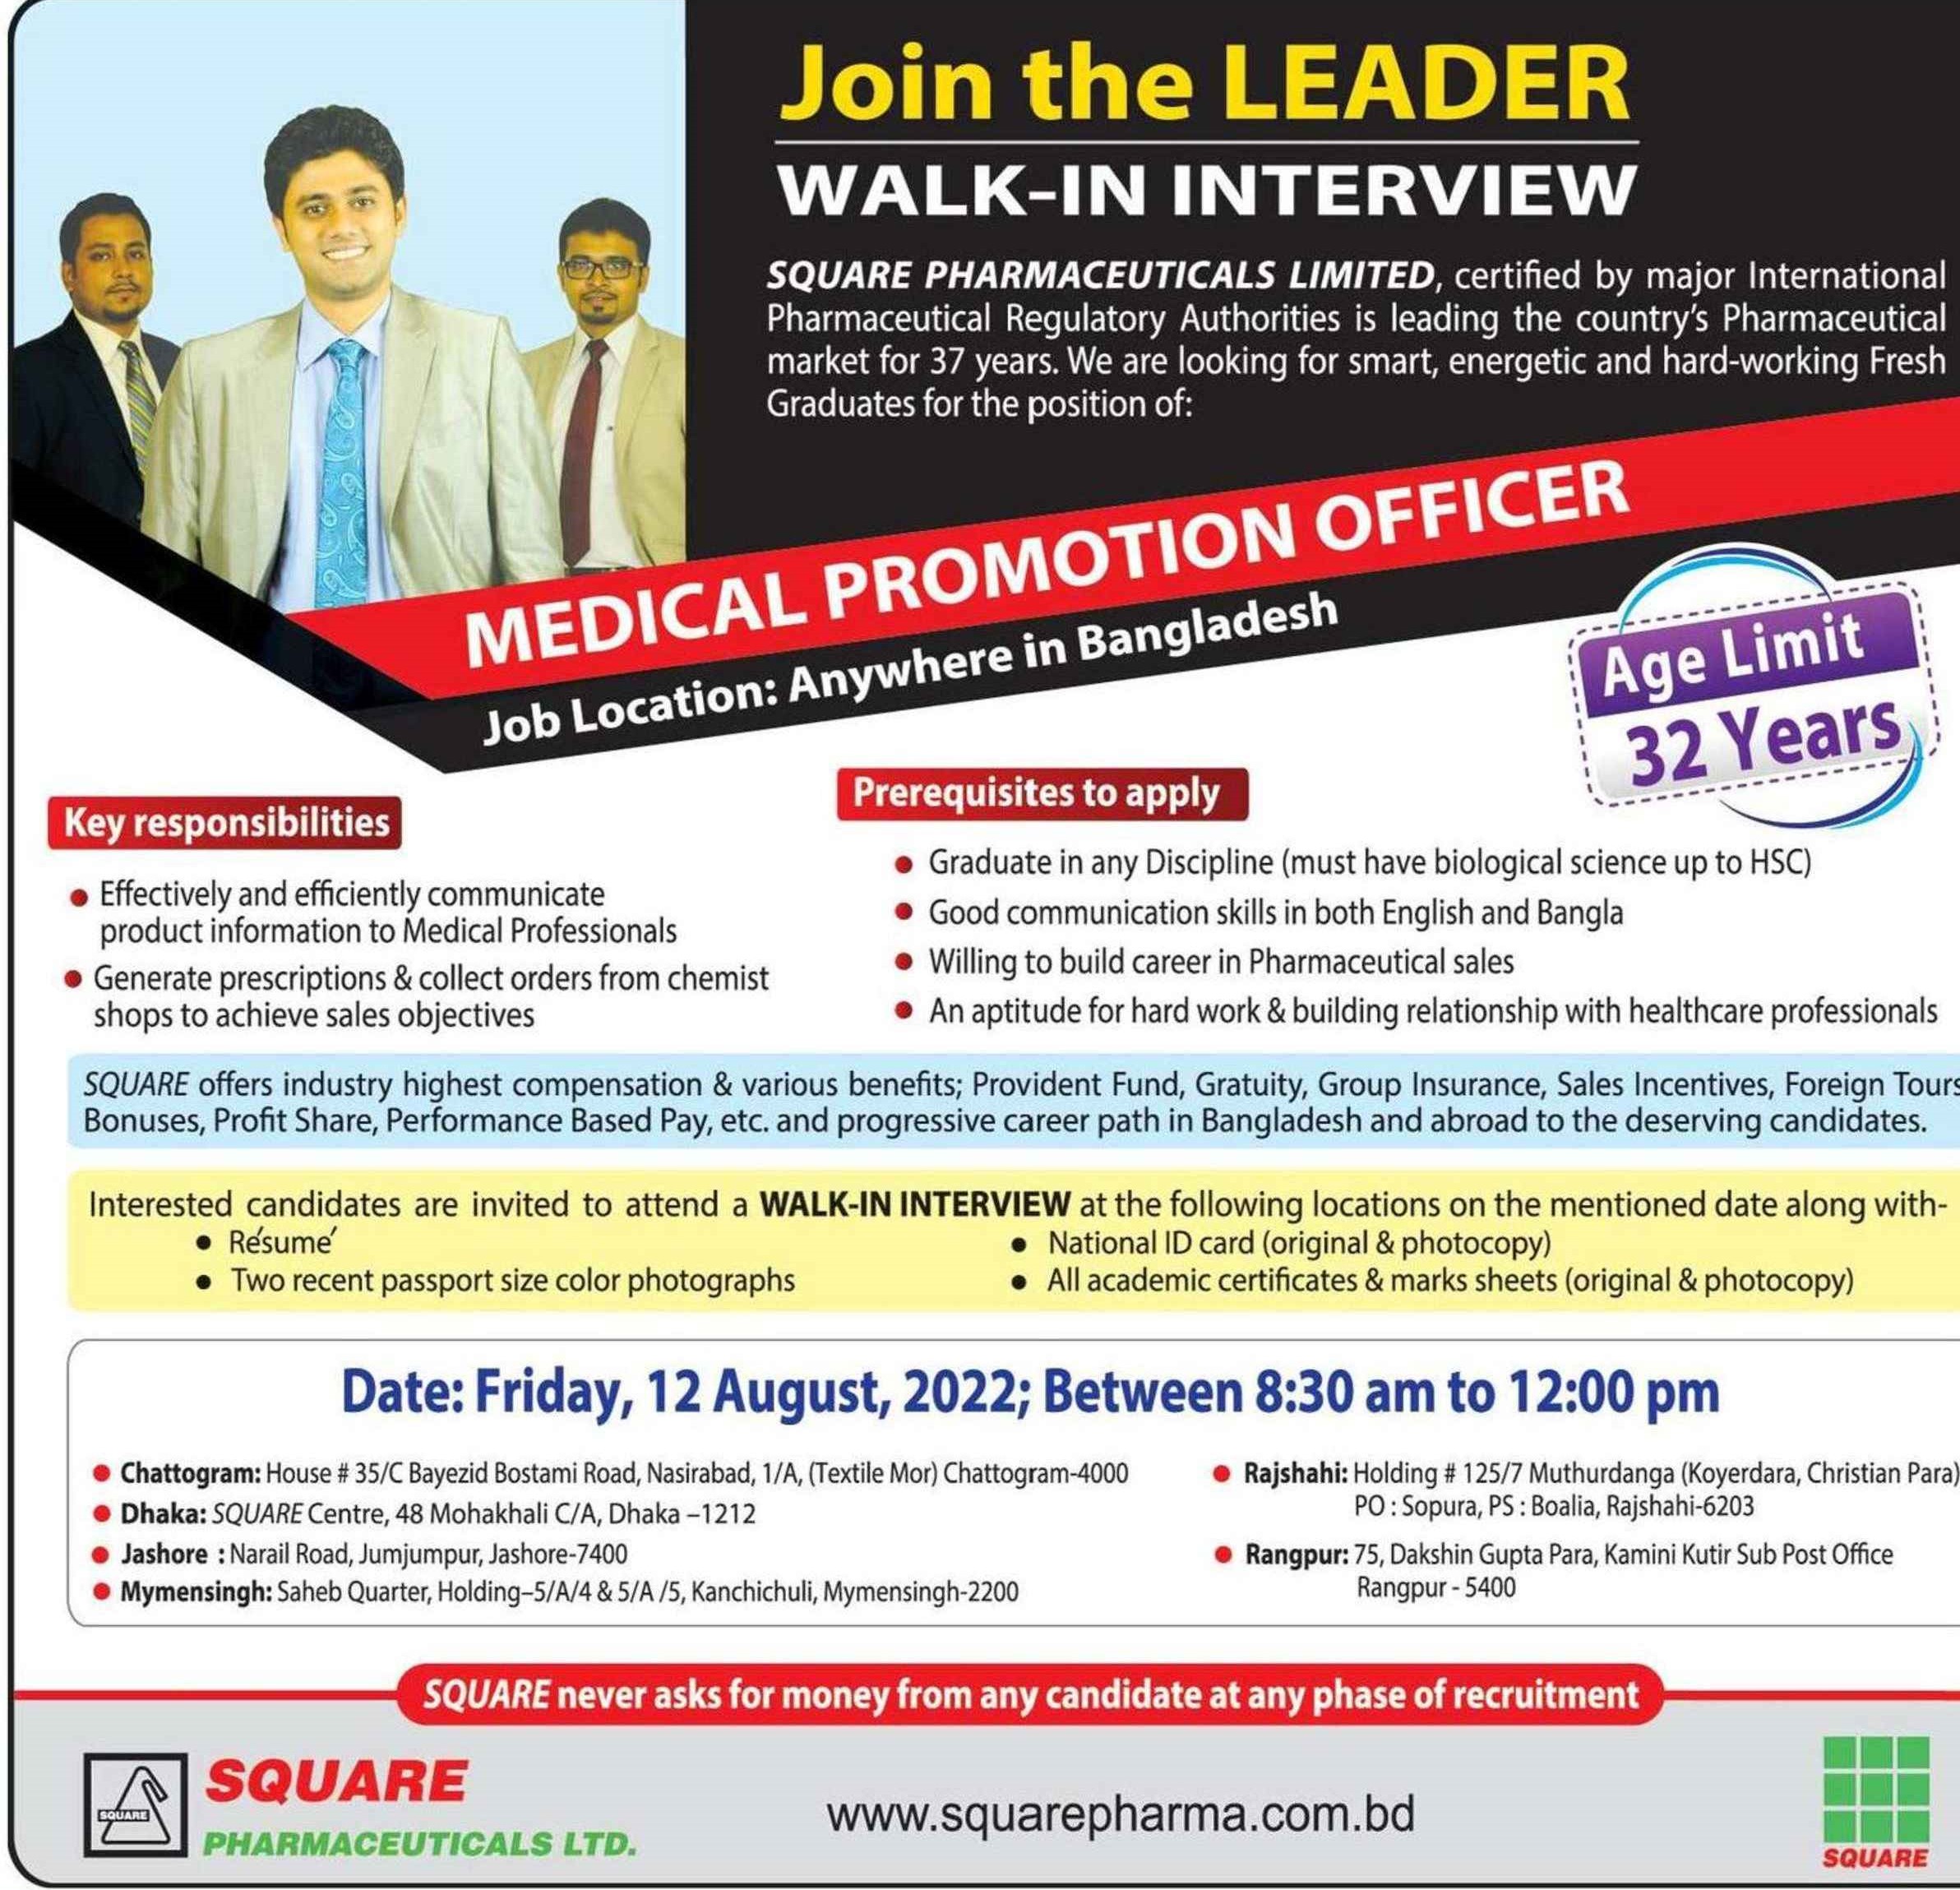 Square pharma job circular for Medical Promotion Officer